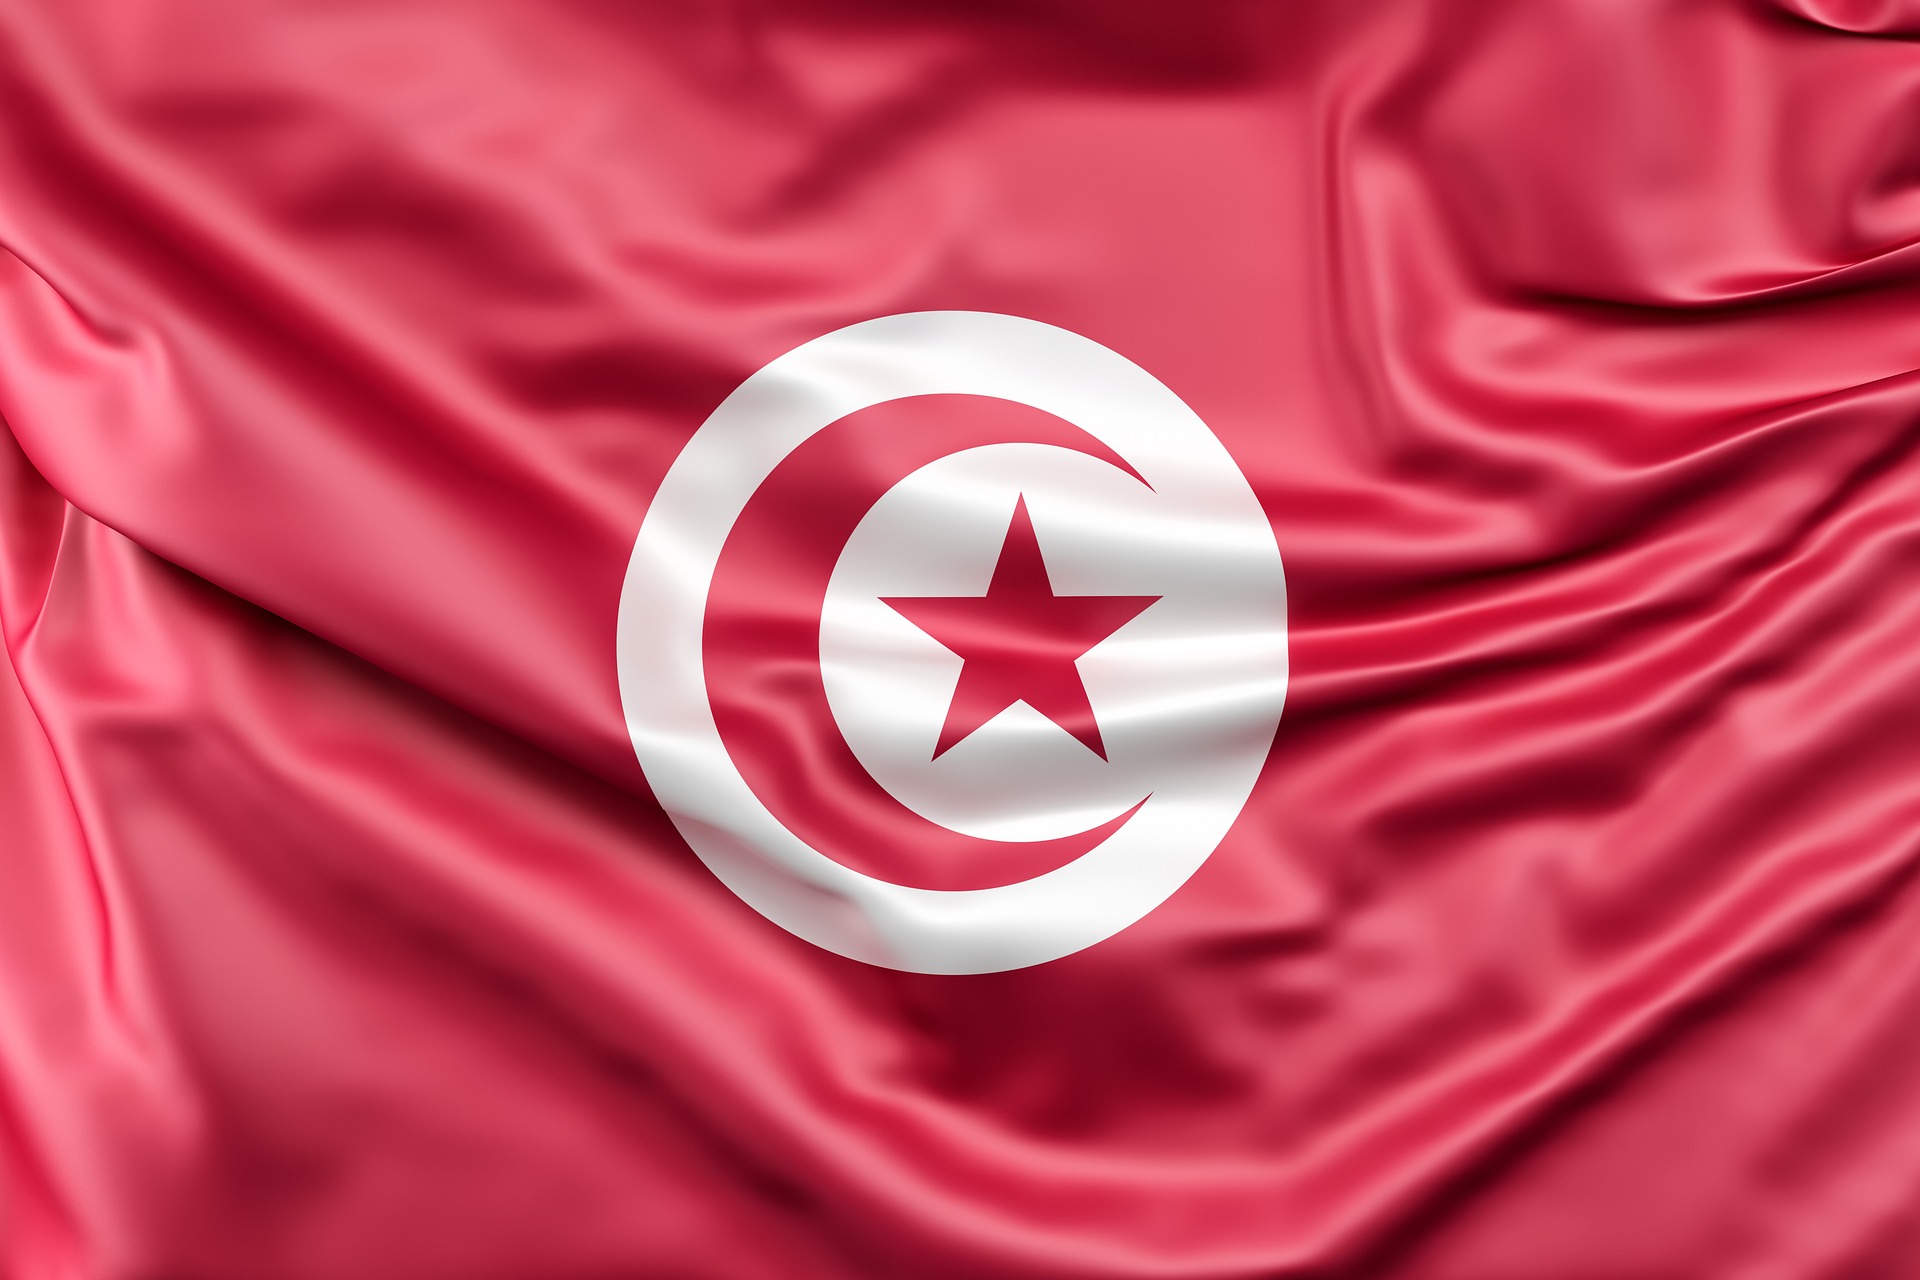 Tunisian textiles target growth despite political turmoil